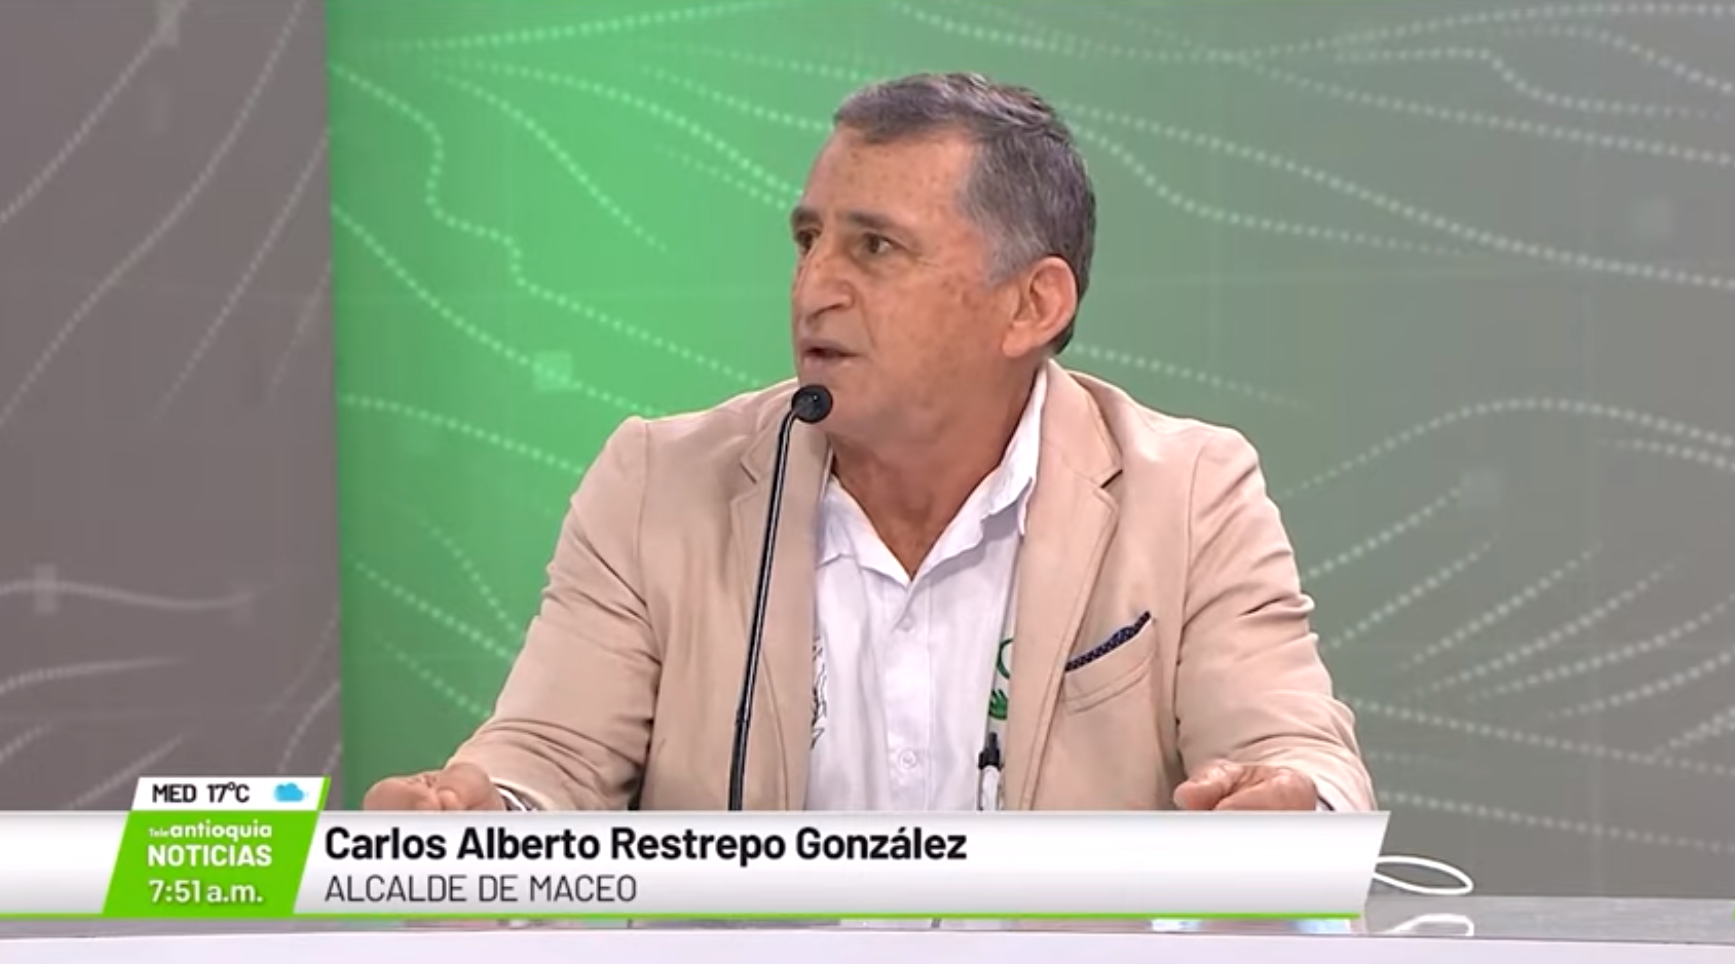 Carlos Alberto Restrepo González